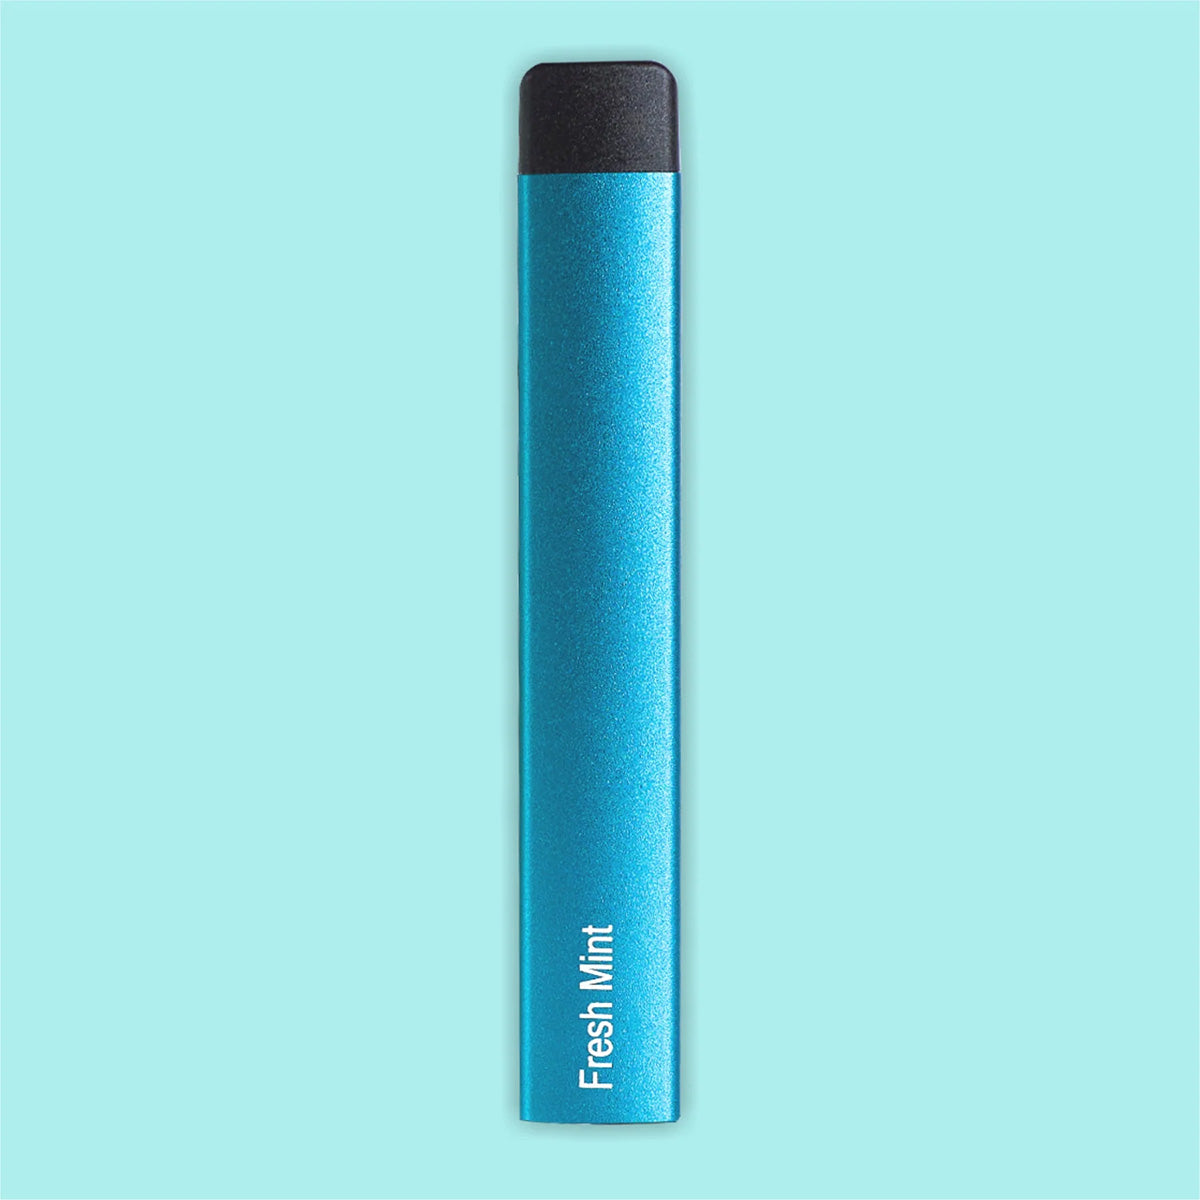 A blue Fresh Mint Ziip Stick vape device against a blue background.